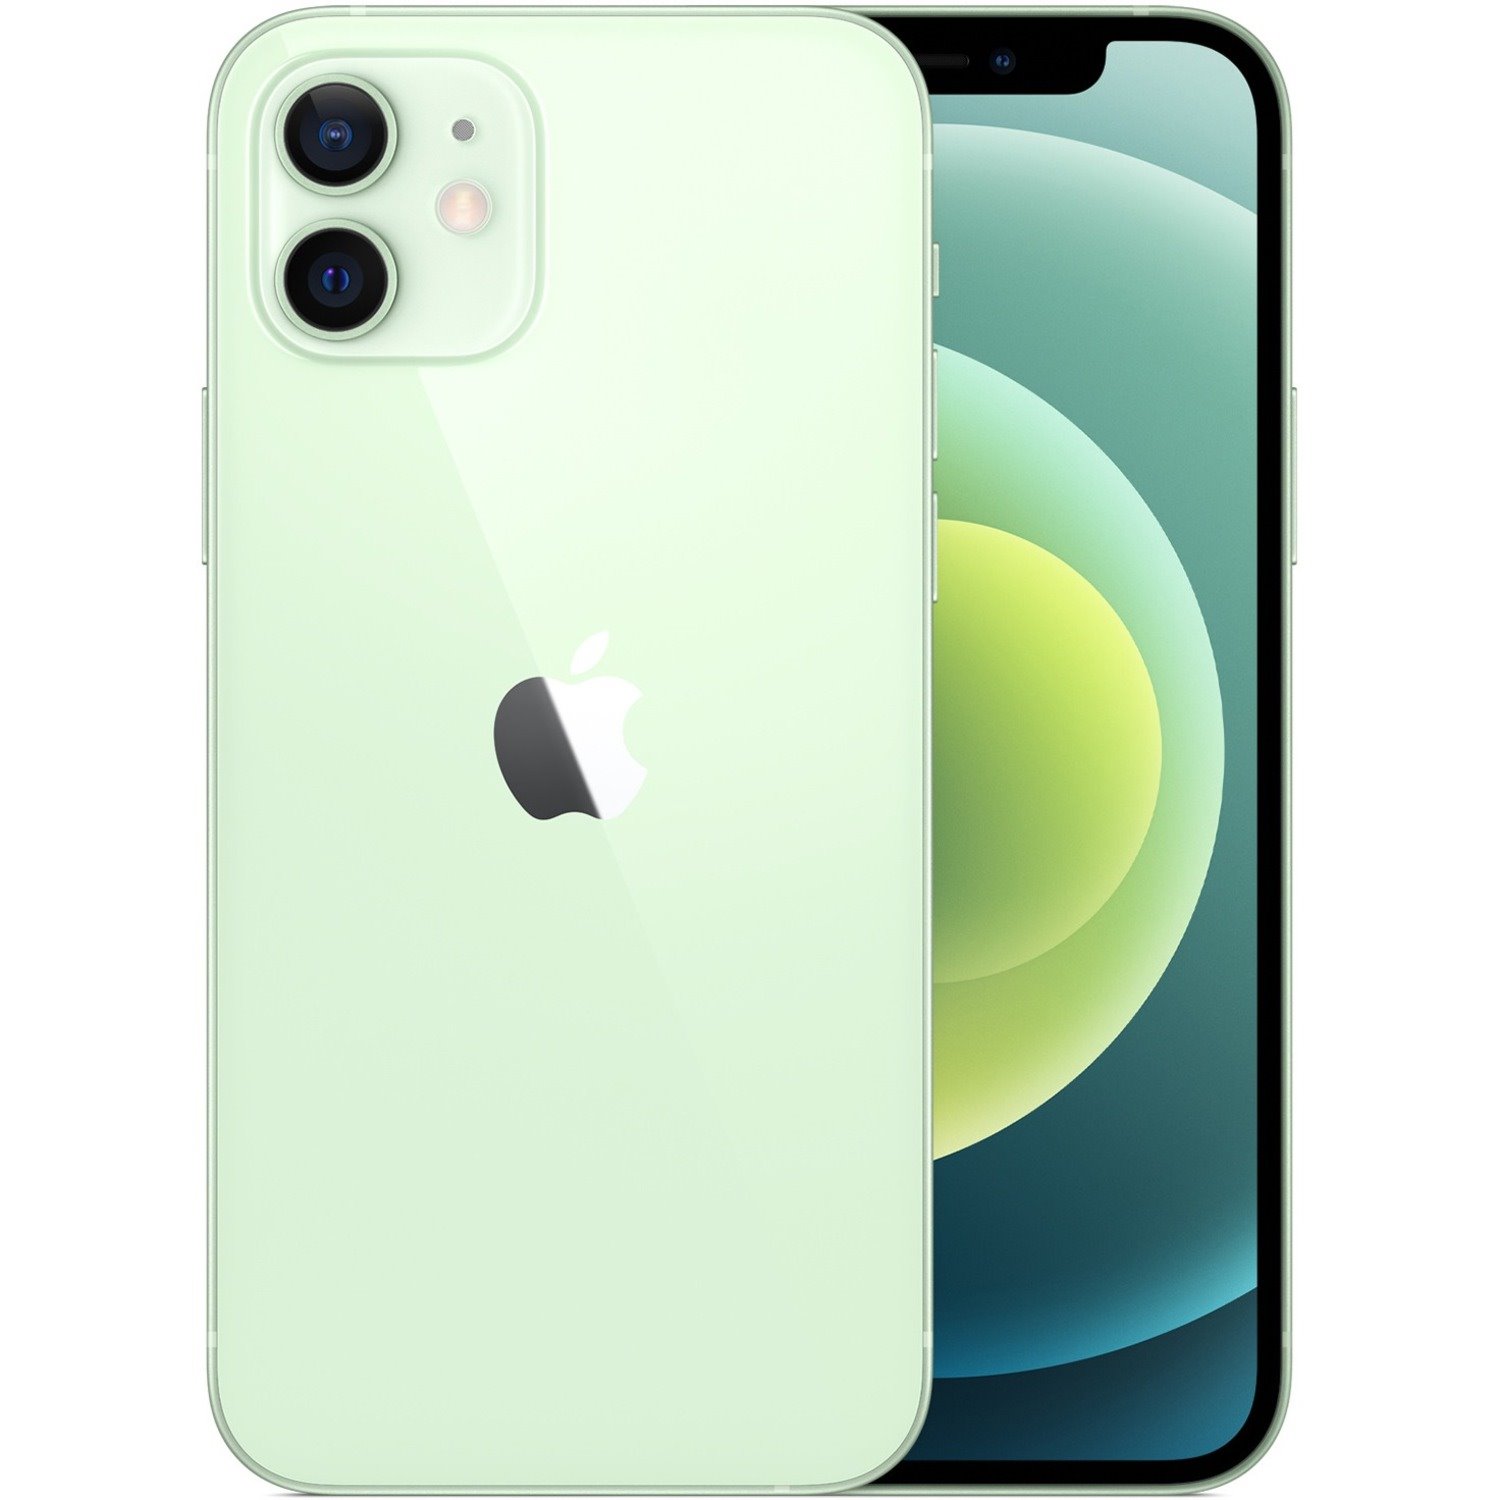 Apple iPhone 12 mini 256 GB Smartphone - 13.7 cm (5.4") OLED Full HD Plus 2340 x 1080 - Hexa-core (6 Core) - iOS 14 - 5G - Green